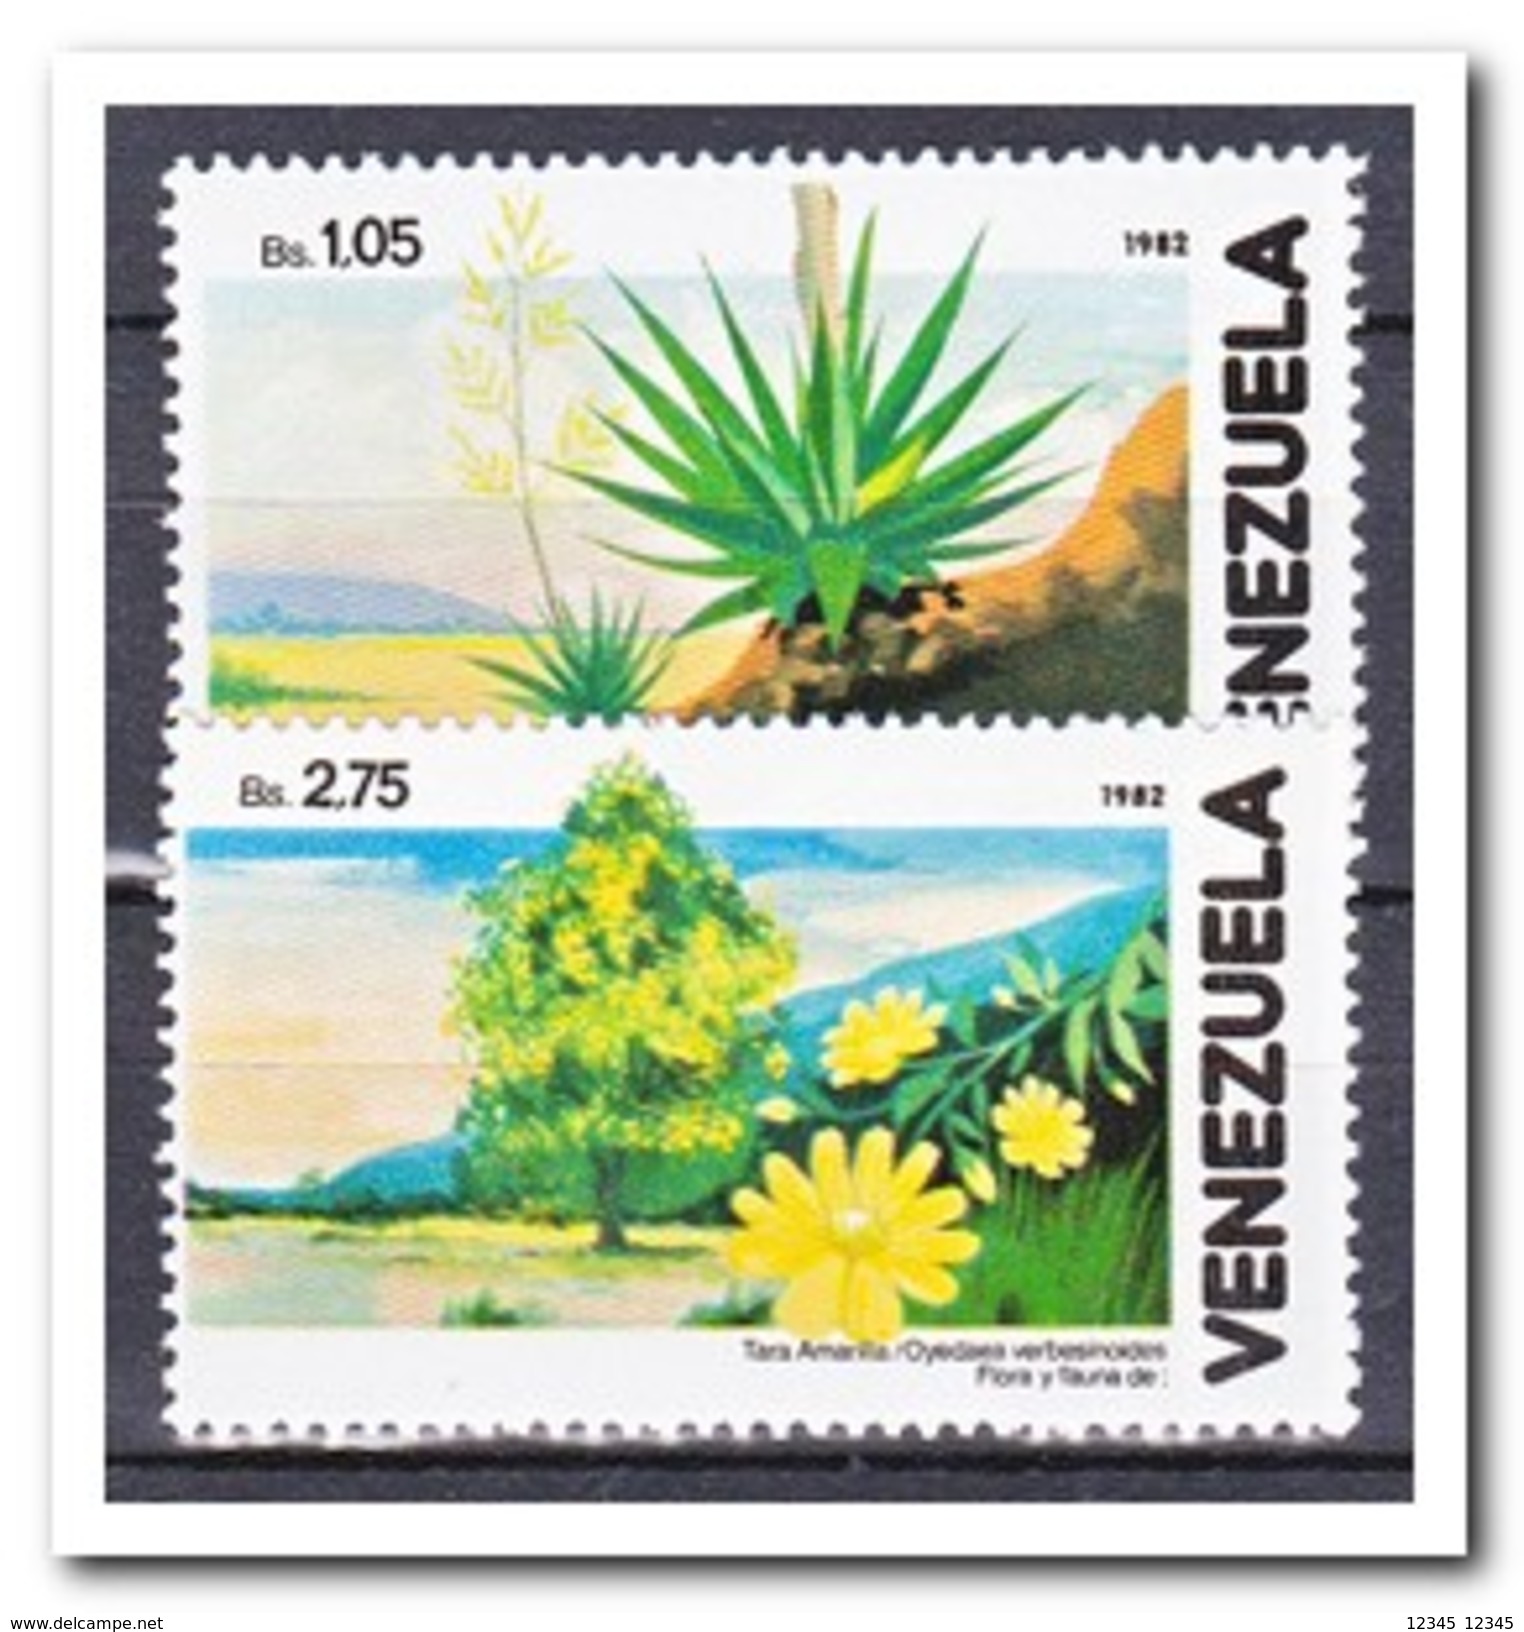 Venezuela 1982, Postfris MNH, Flowers, Trees, Plants - Venezuela